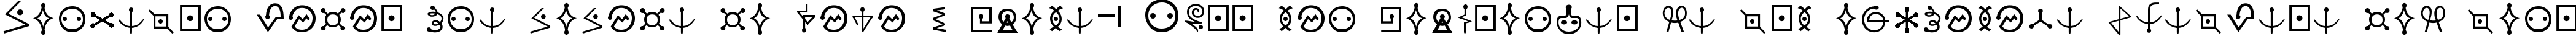 Пример написания шрифтом Futurama Alien Alphabet One текста на испанском